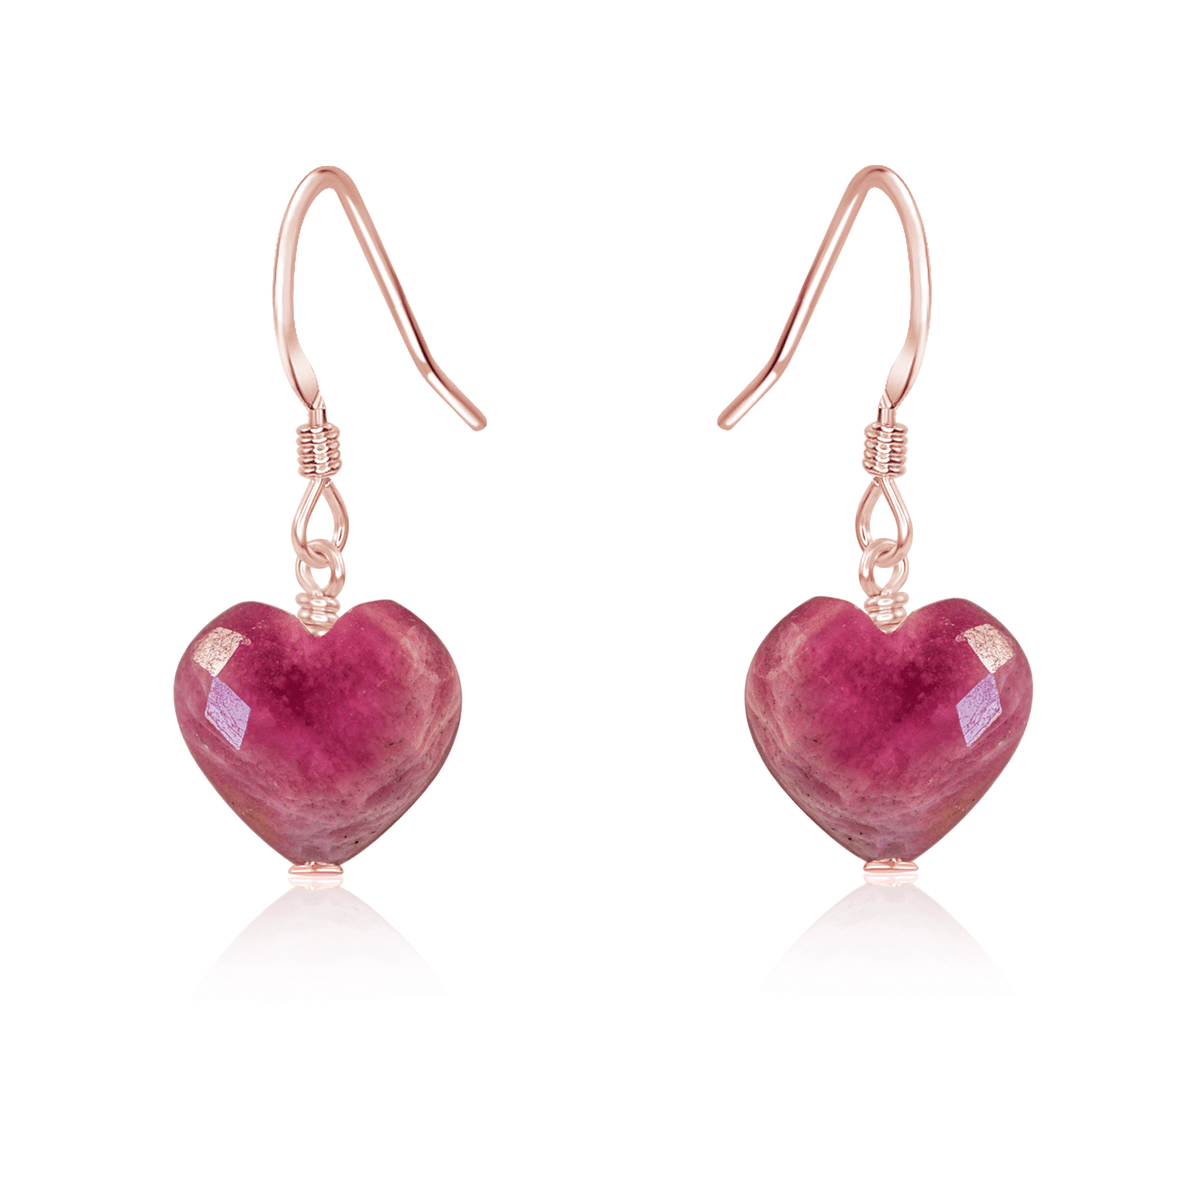 Ruby Crystal Heart Dangle Earrings - Ruby Crystal Heart Dangle Earrings - 14k Rose Gold Fill - Luna Tide Handmade Crystal Jewellery